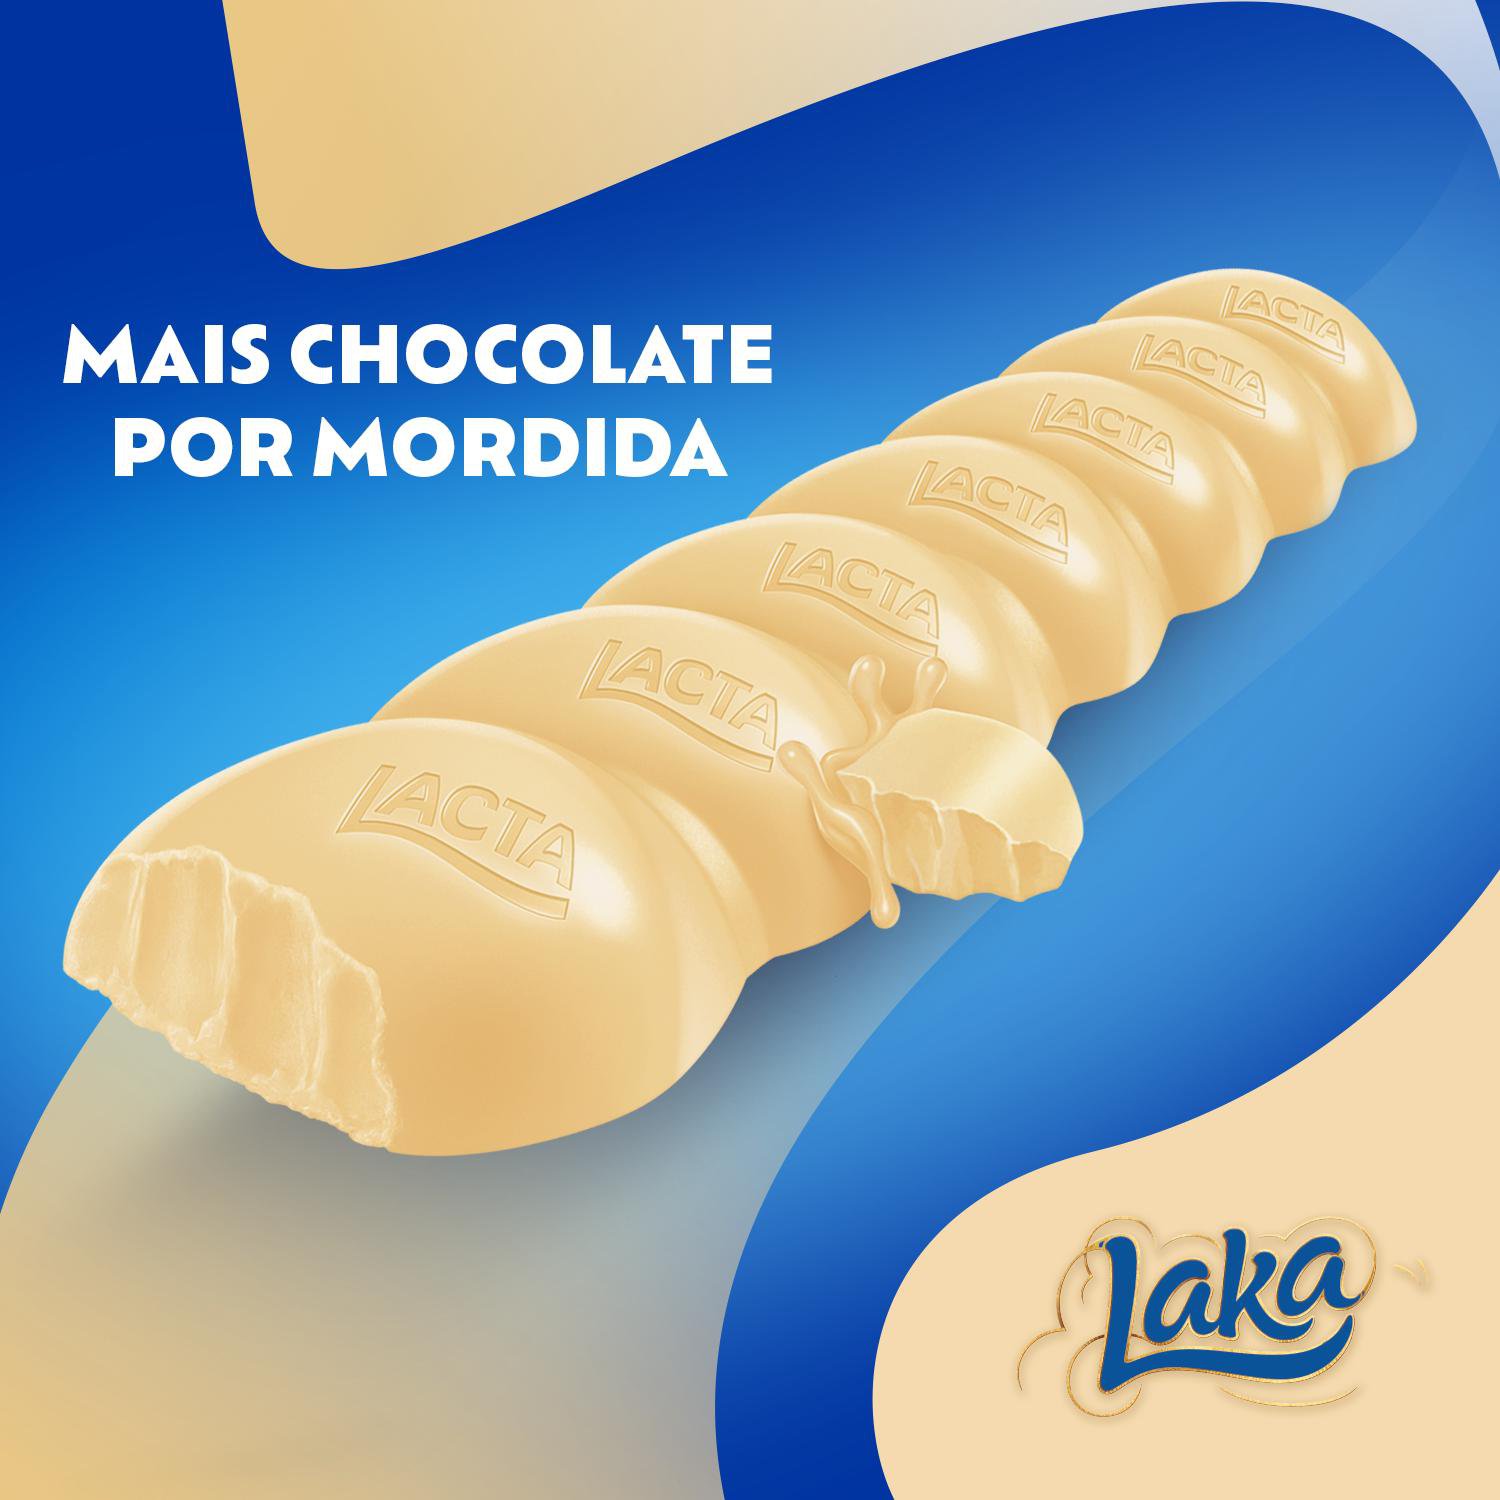 Chocolate Laka Lacta 34g Mambo Supermercado São Paulo - Mambo Supermercado  São Paulo